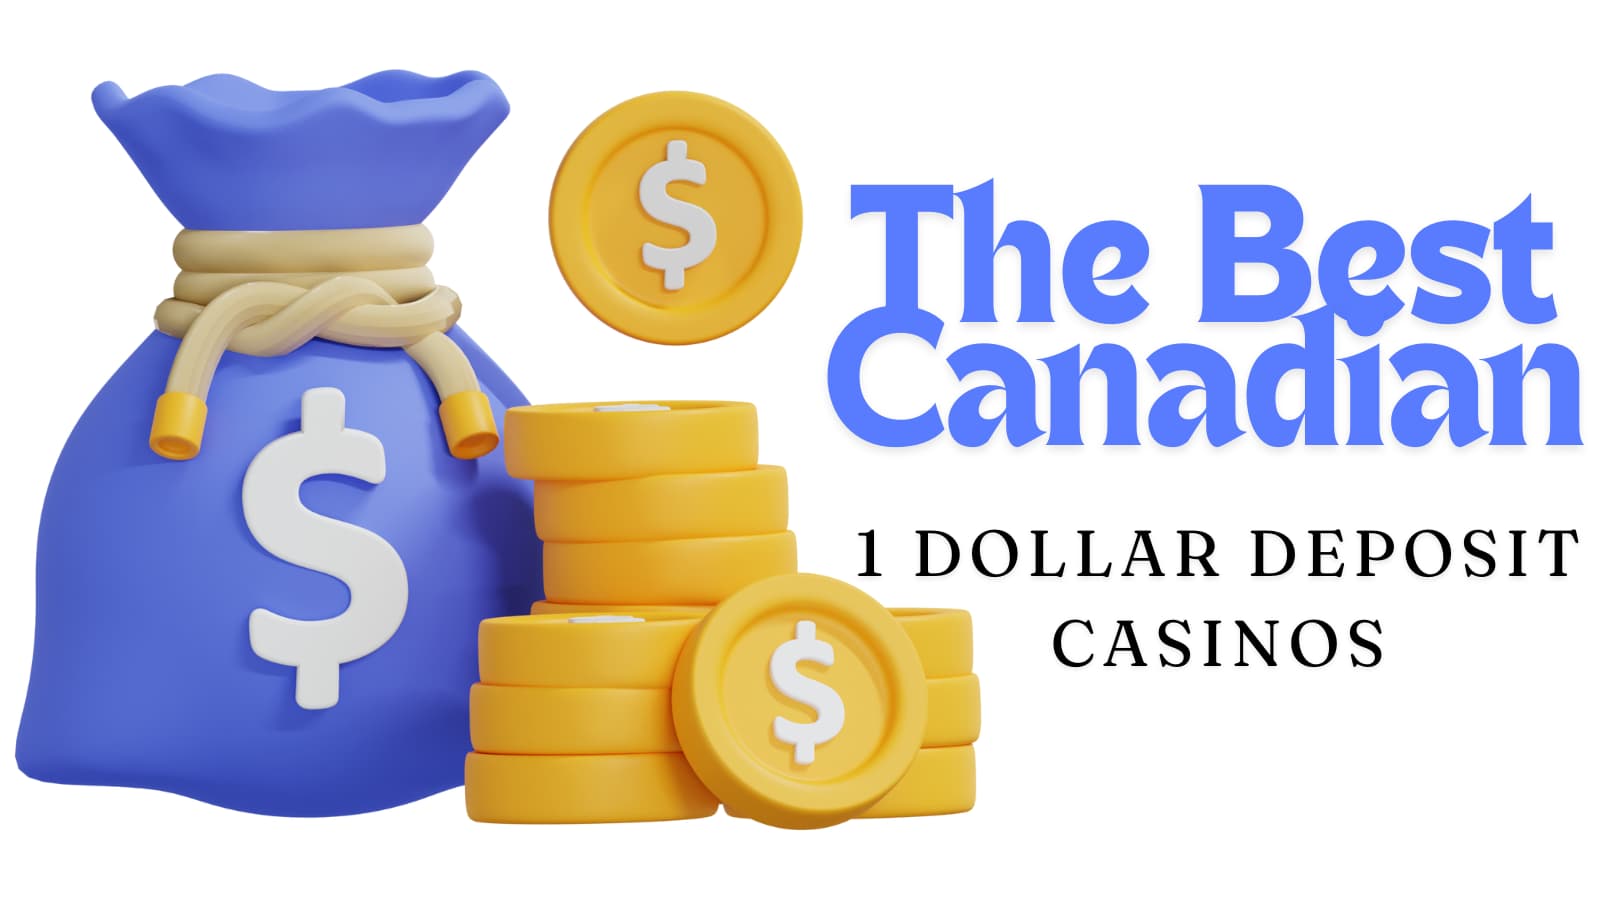 the best canadian 1 dollar deposit casinos